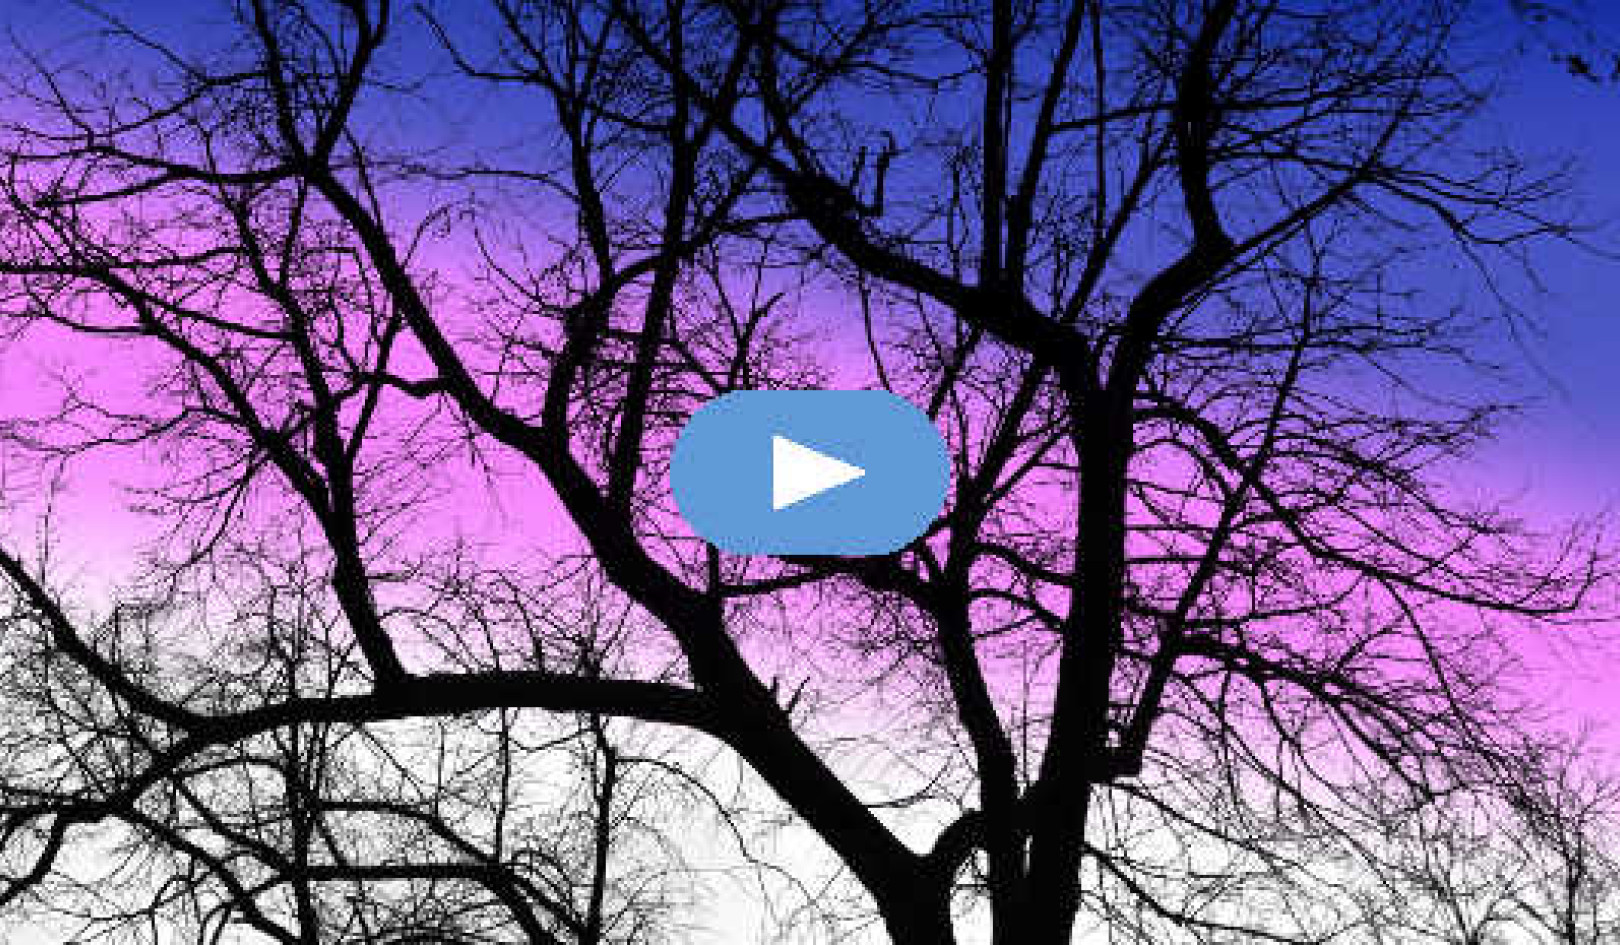 Puu talvella on edelleen puu (video)